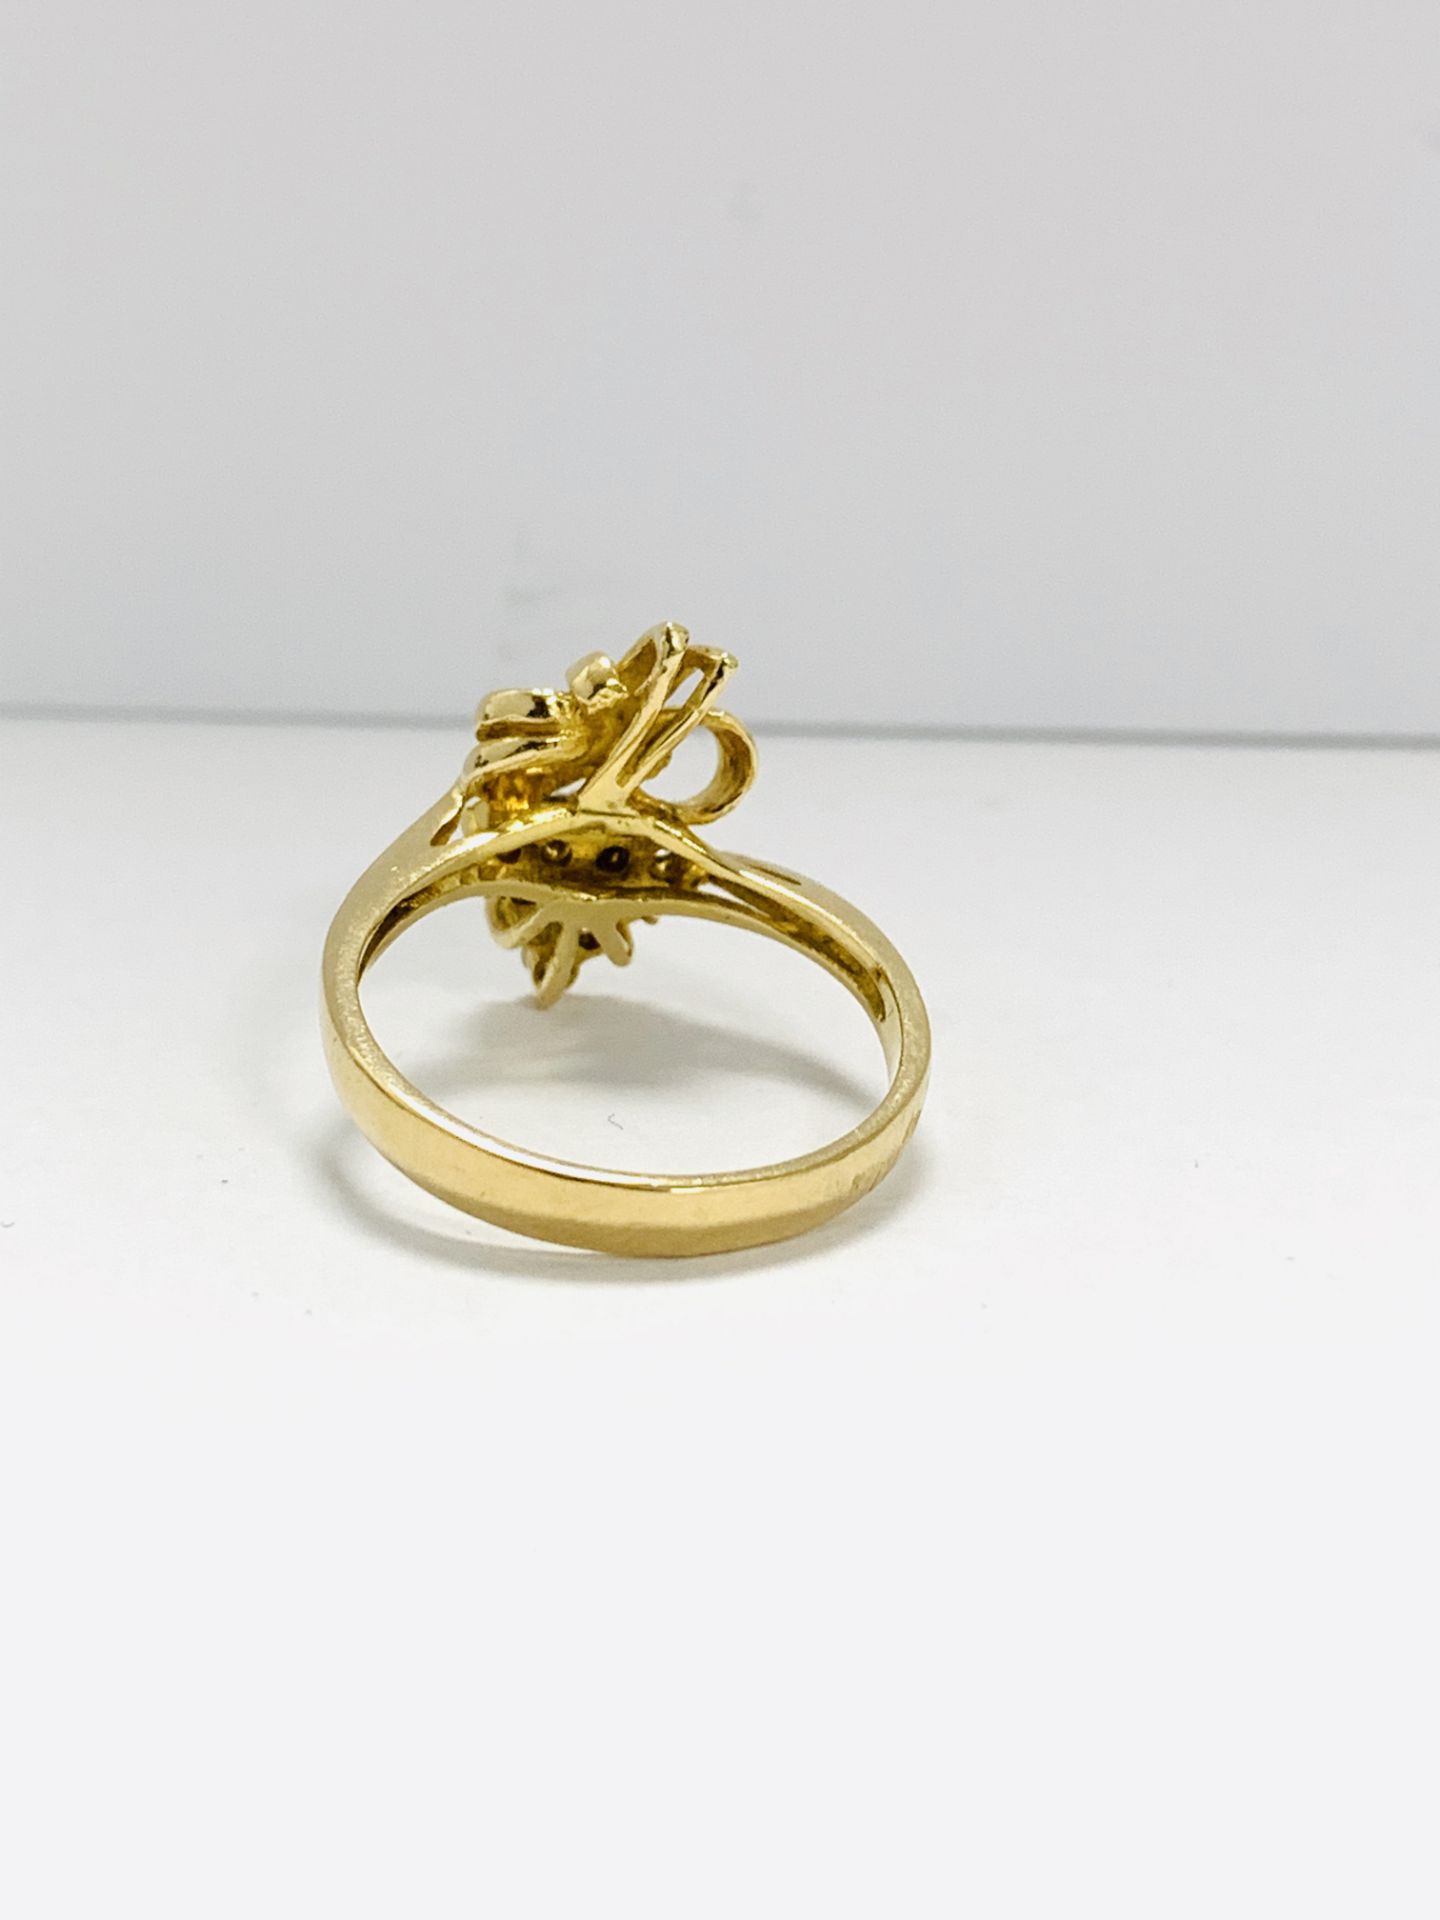 18K Yellow Gold Ring - Image 4 of 8